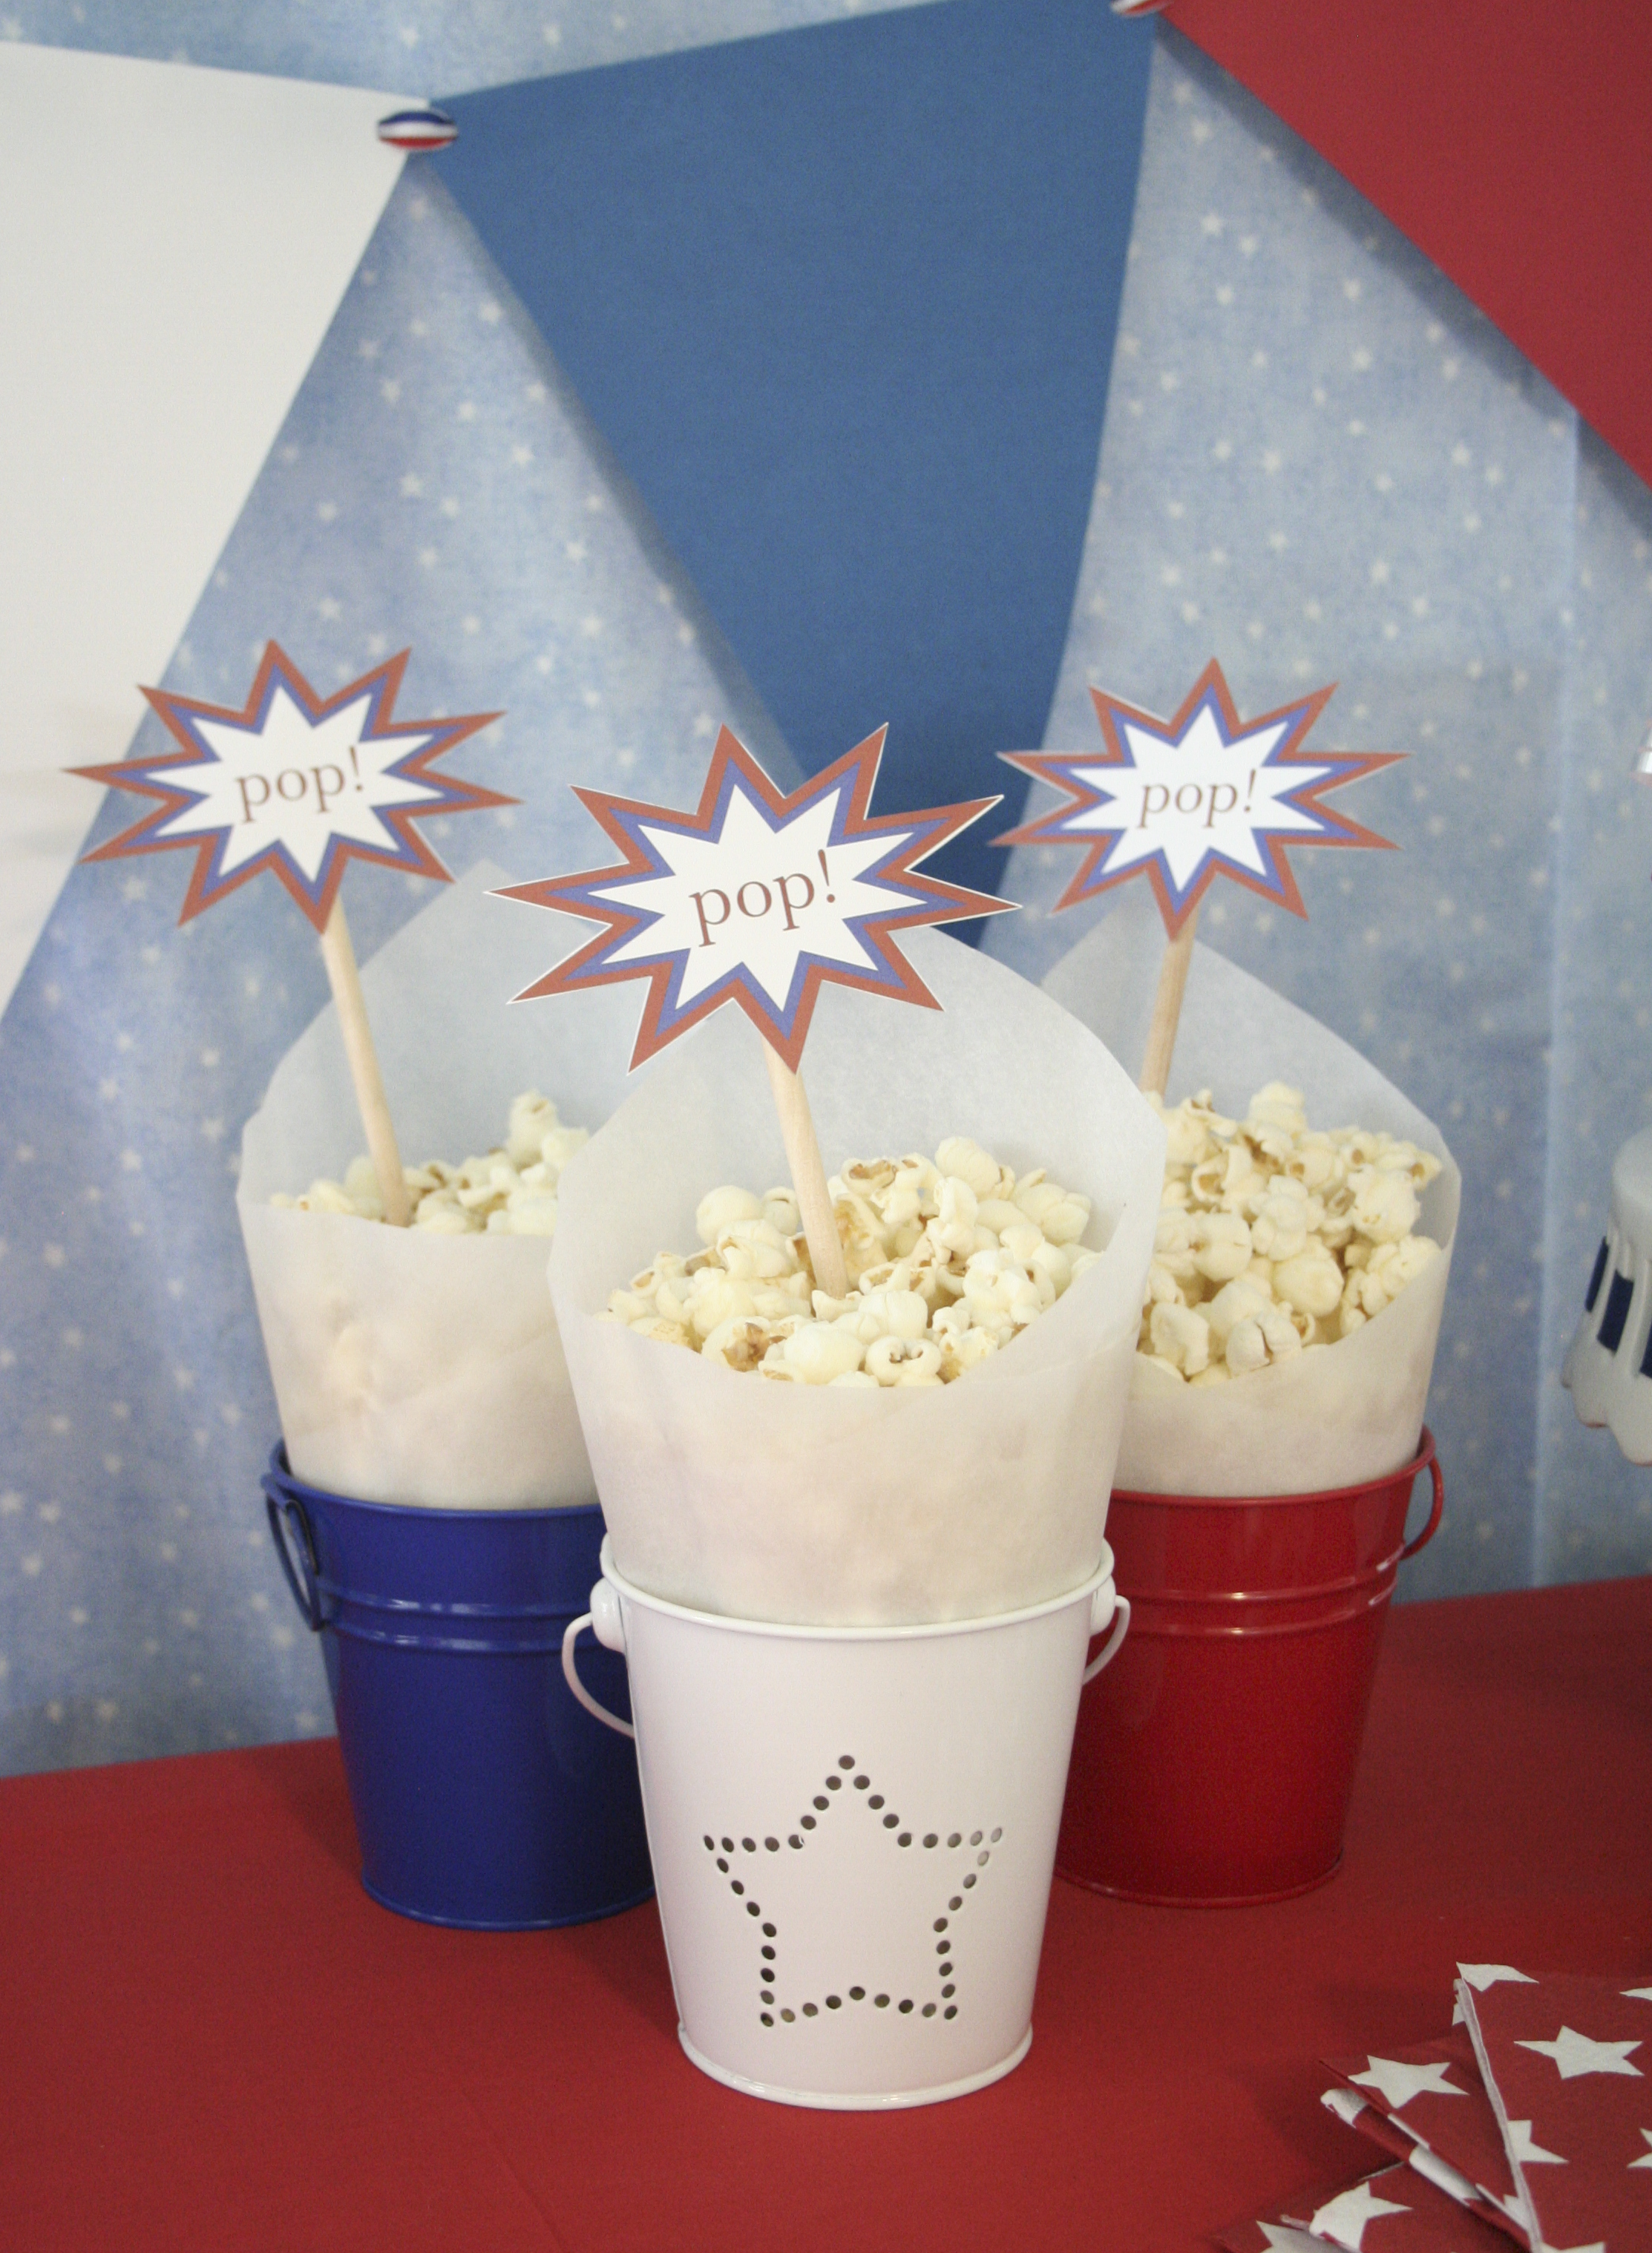 Celebrate and Decorate “pop” Popcorn buckets